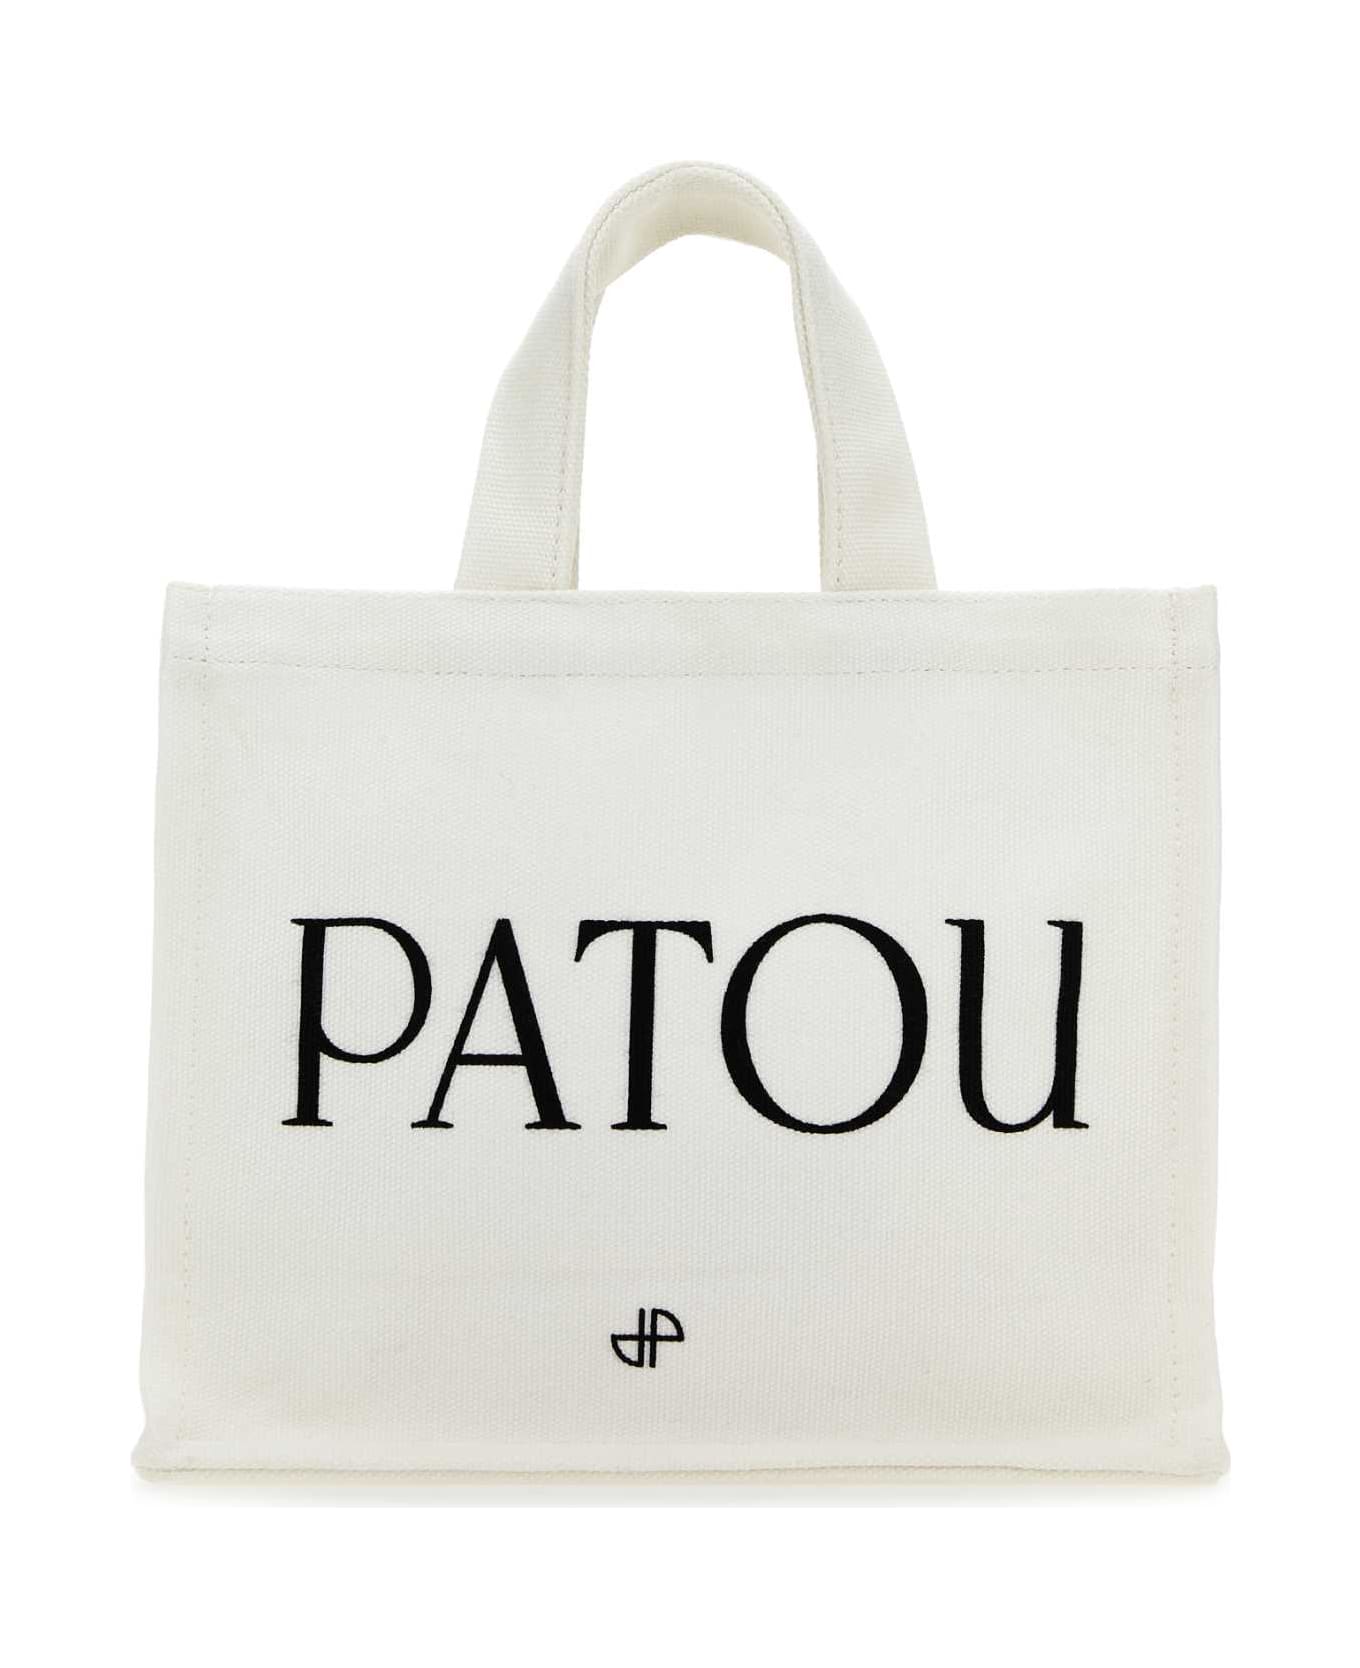 Patou White Cotton Shopping Bag - 090C